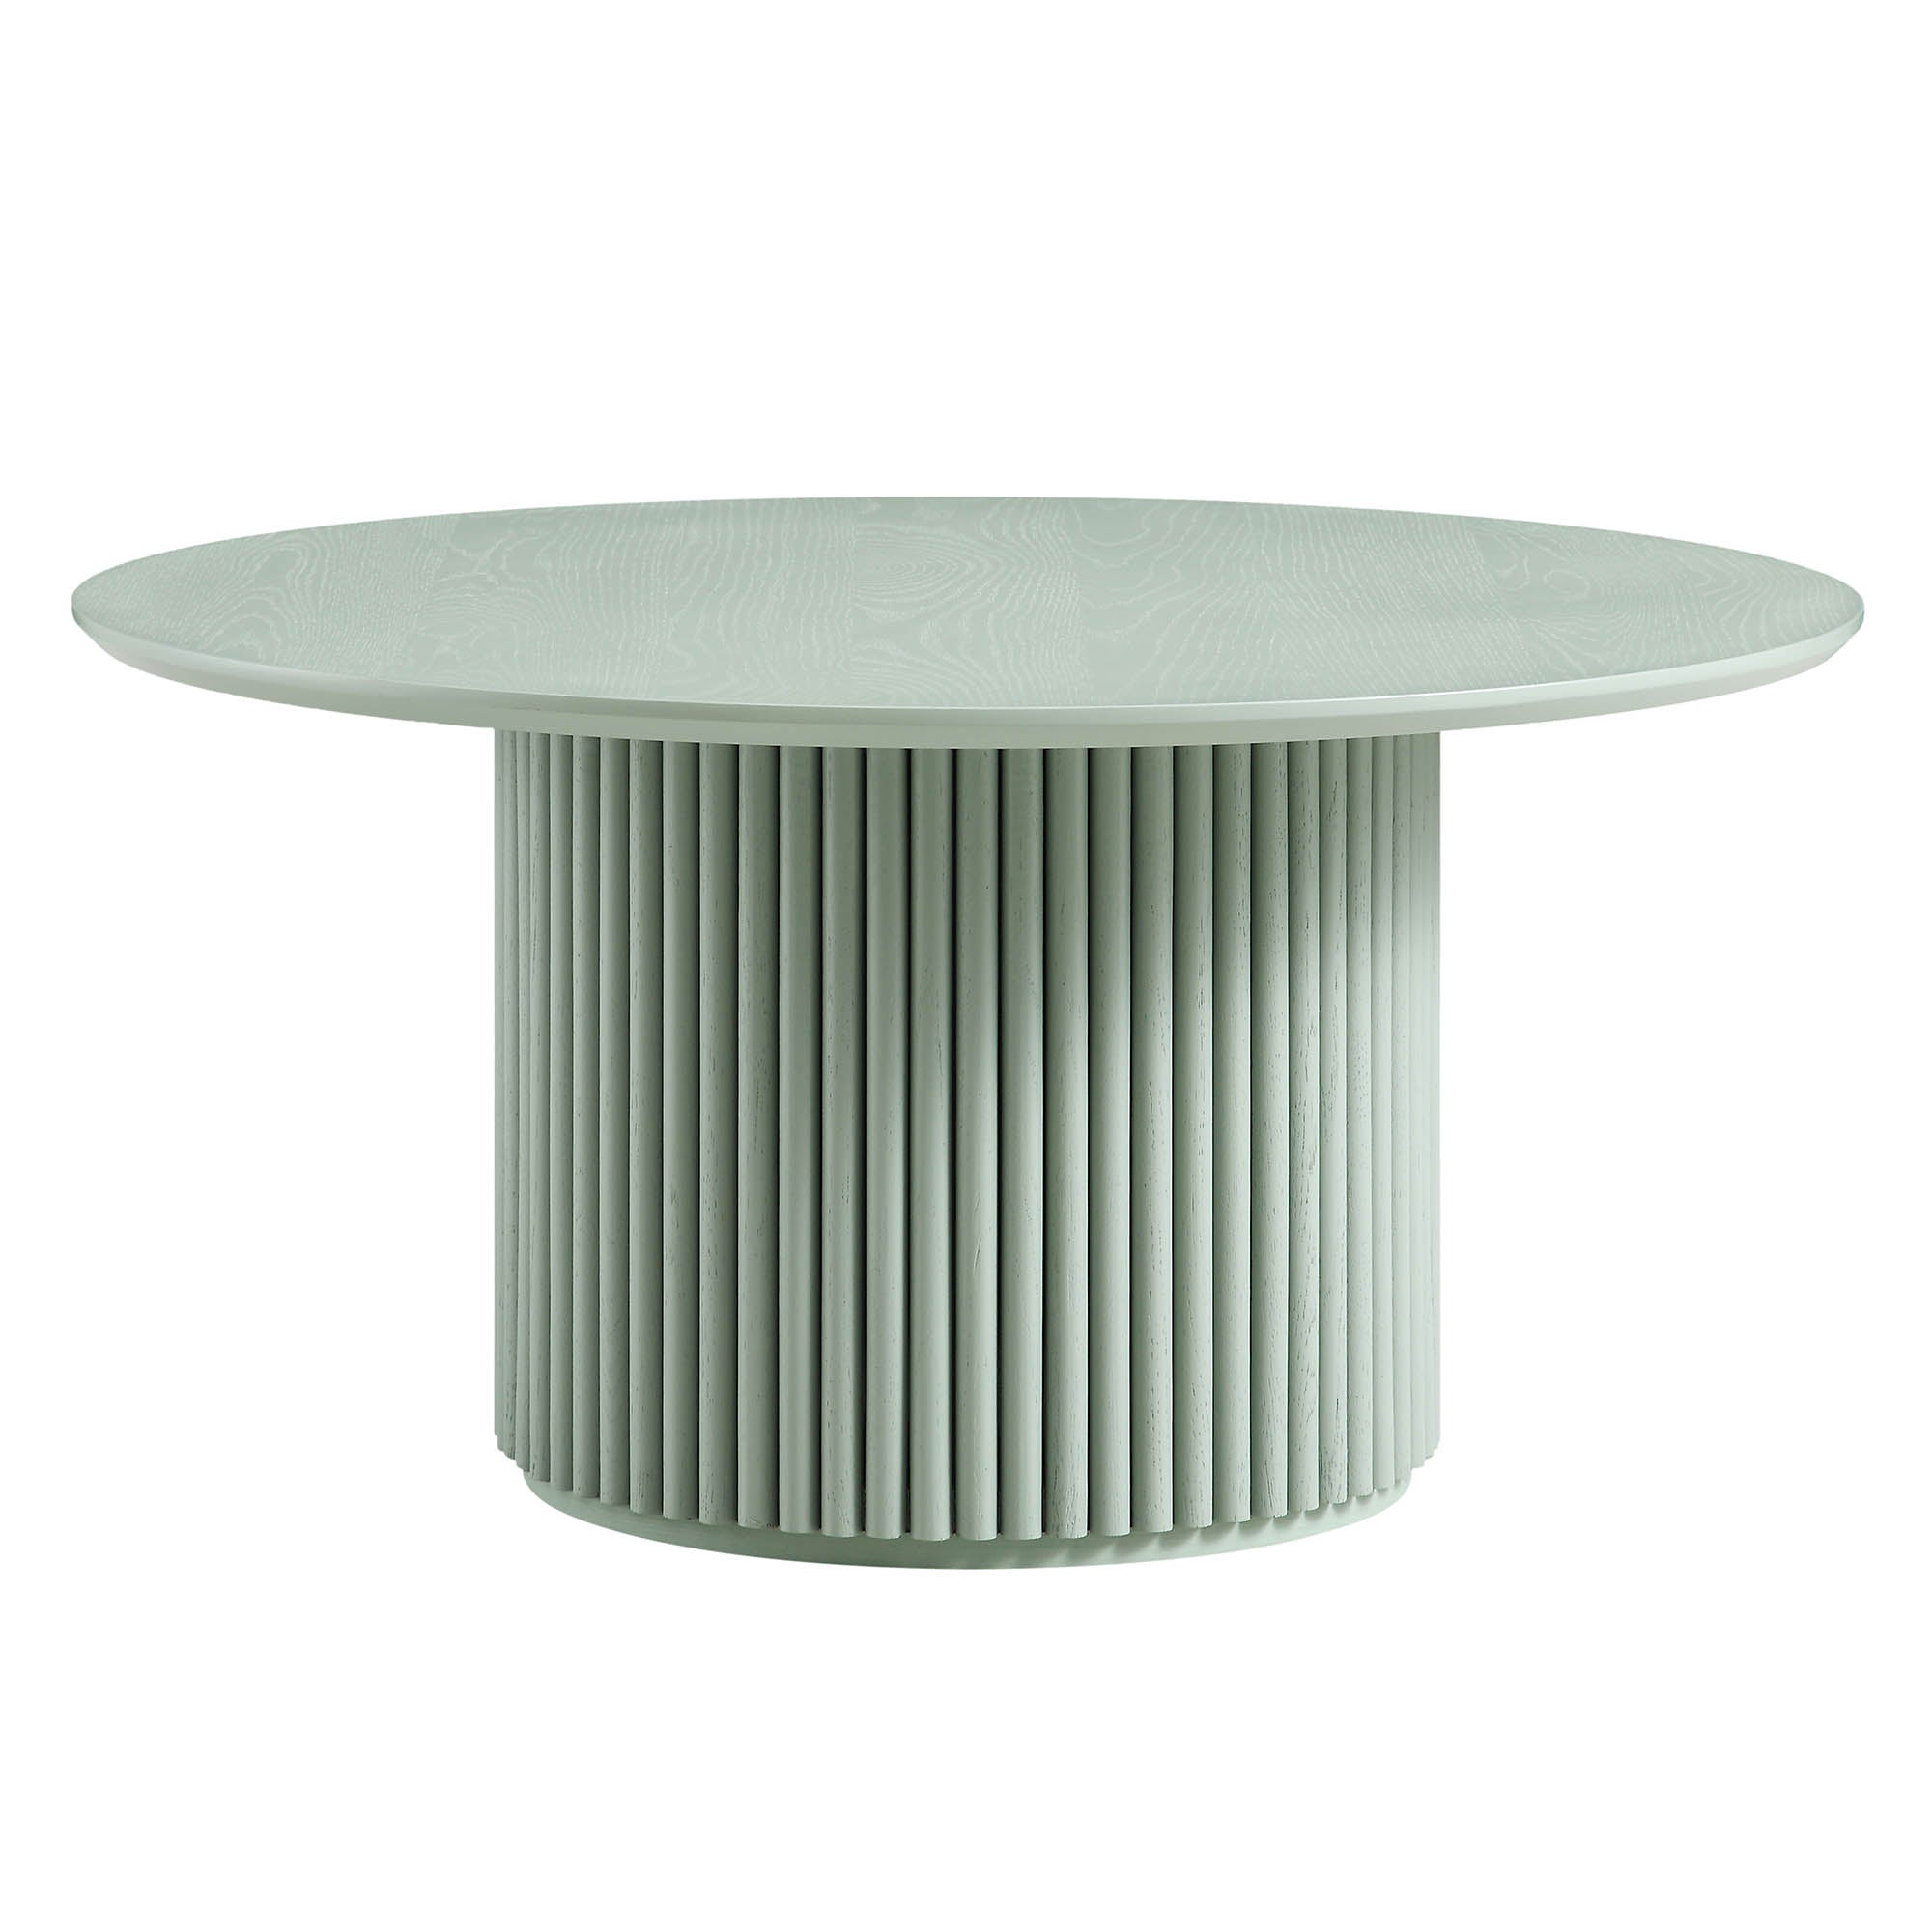 Maru Round Oak Pedestal Coffee Table, Sage Green